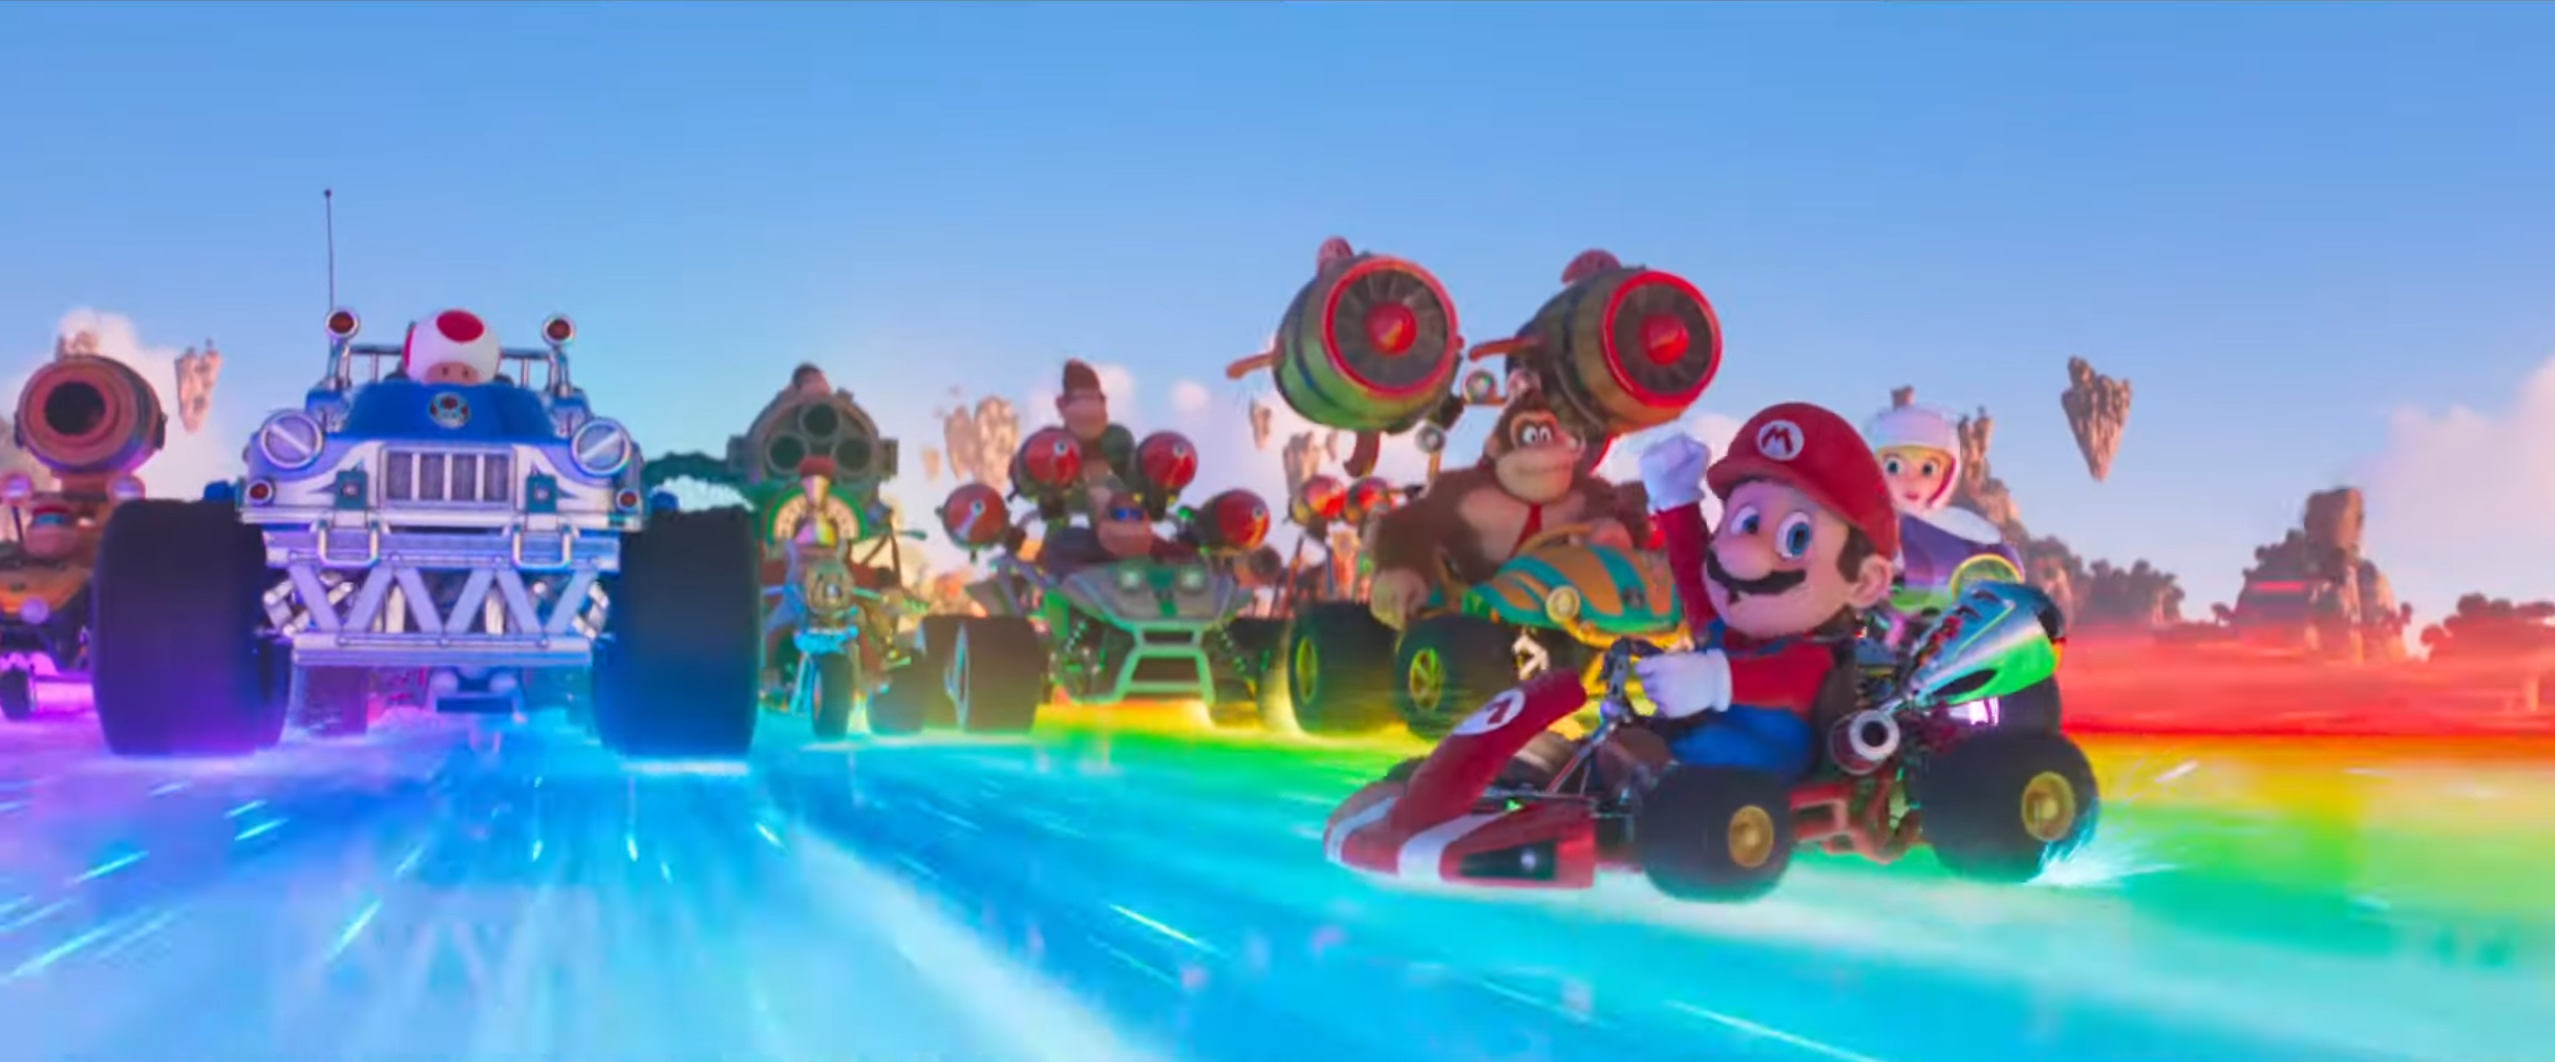 Latest Super Mario Bros. movie trailer features a bold, new Princess Peach  | Ars Technica